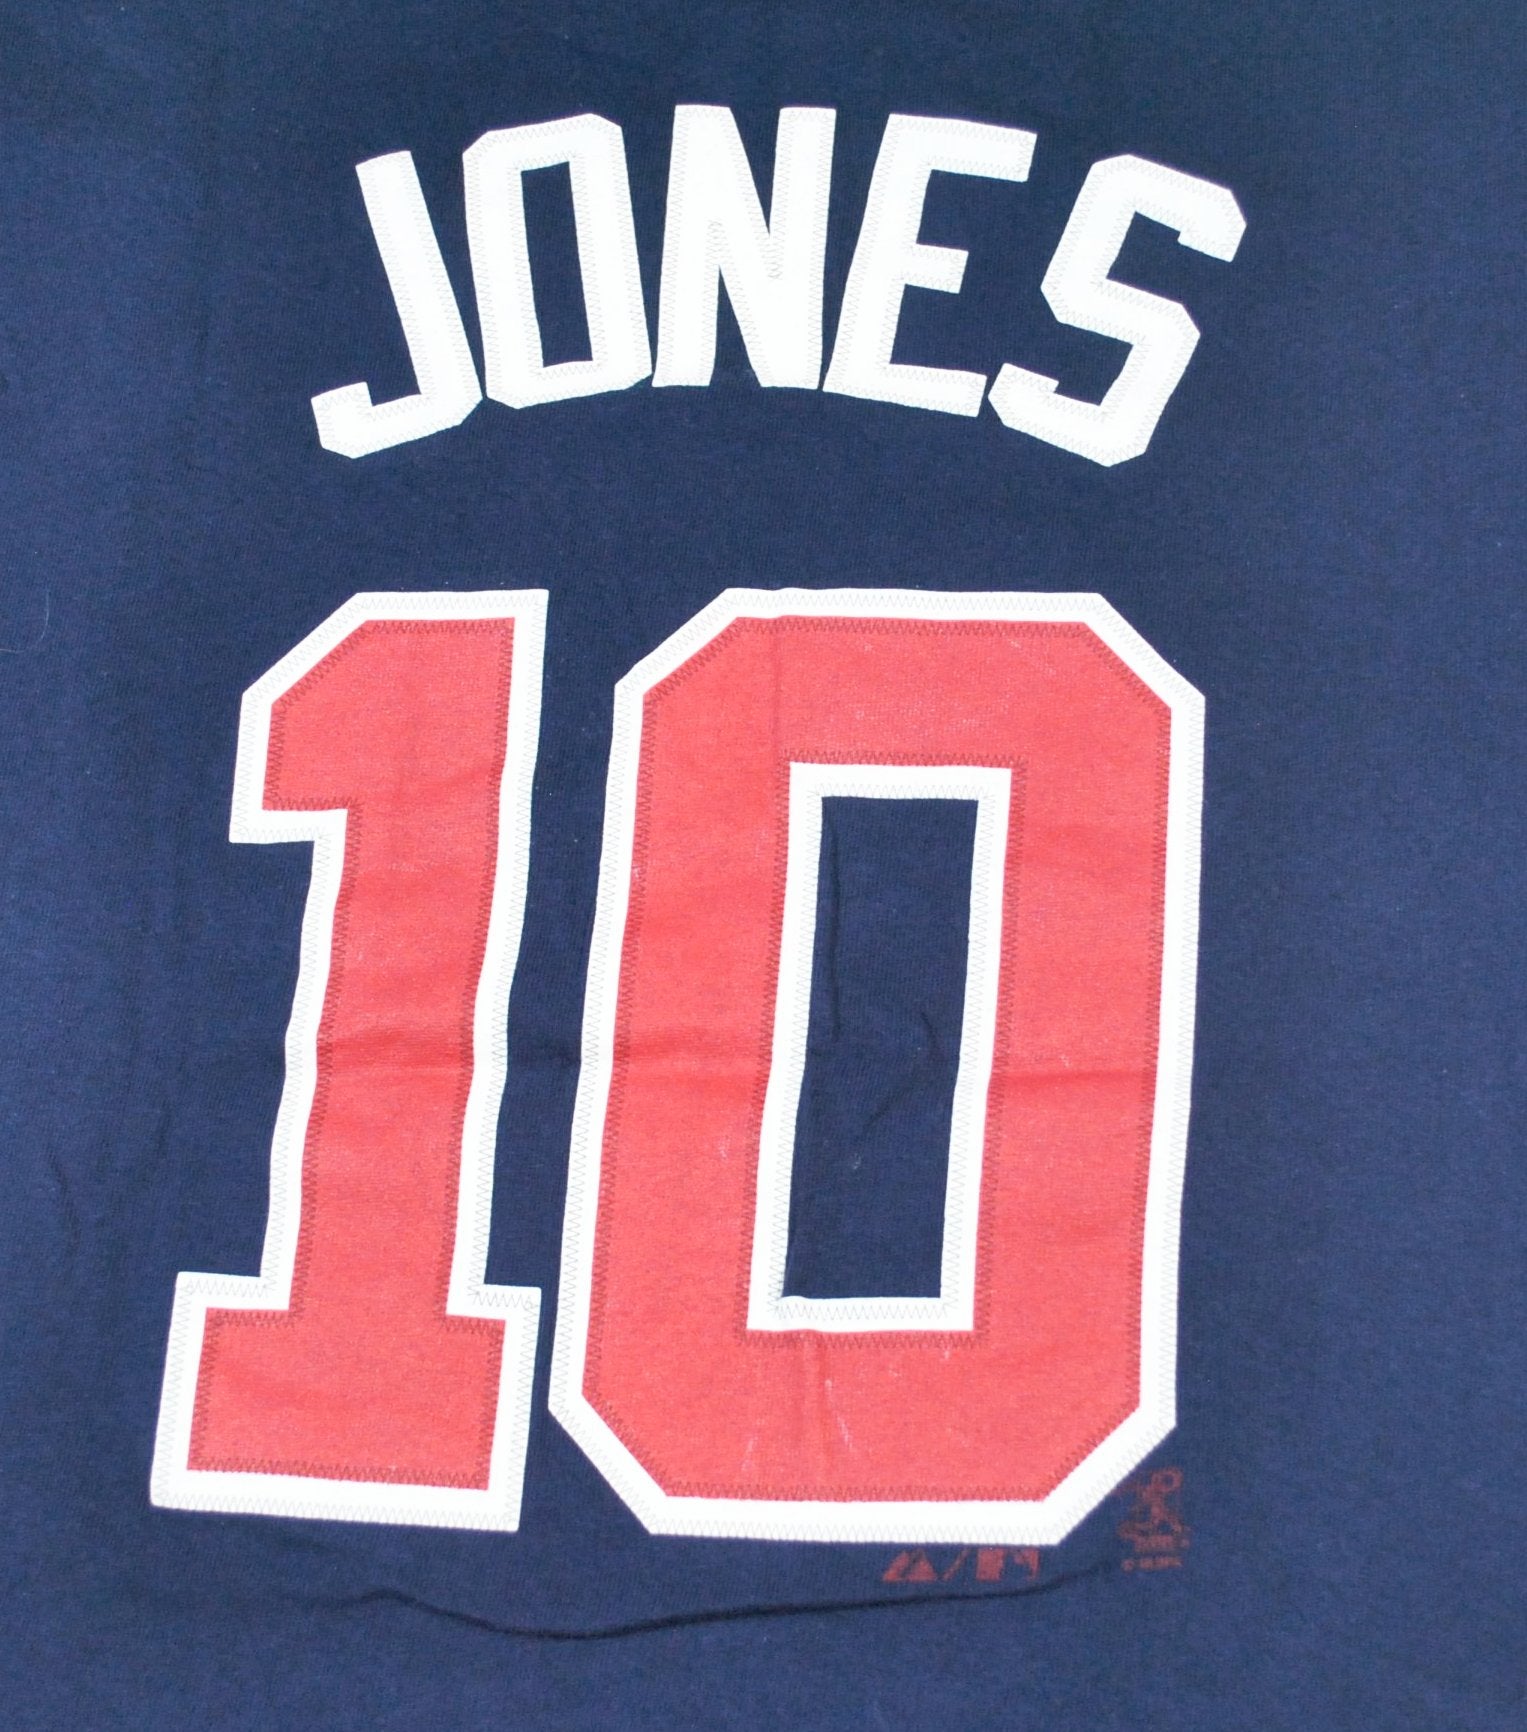 The Braves Chipper Jones John Snoljz Shirt